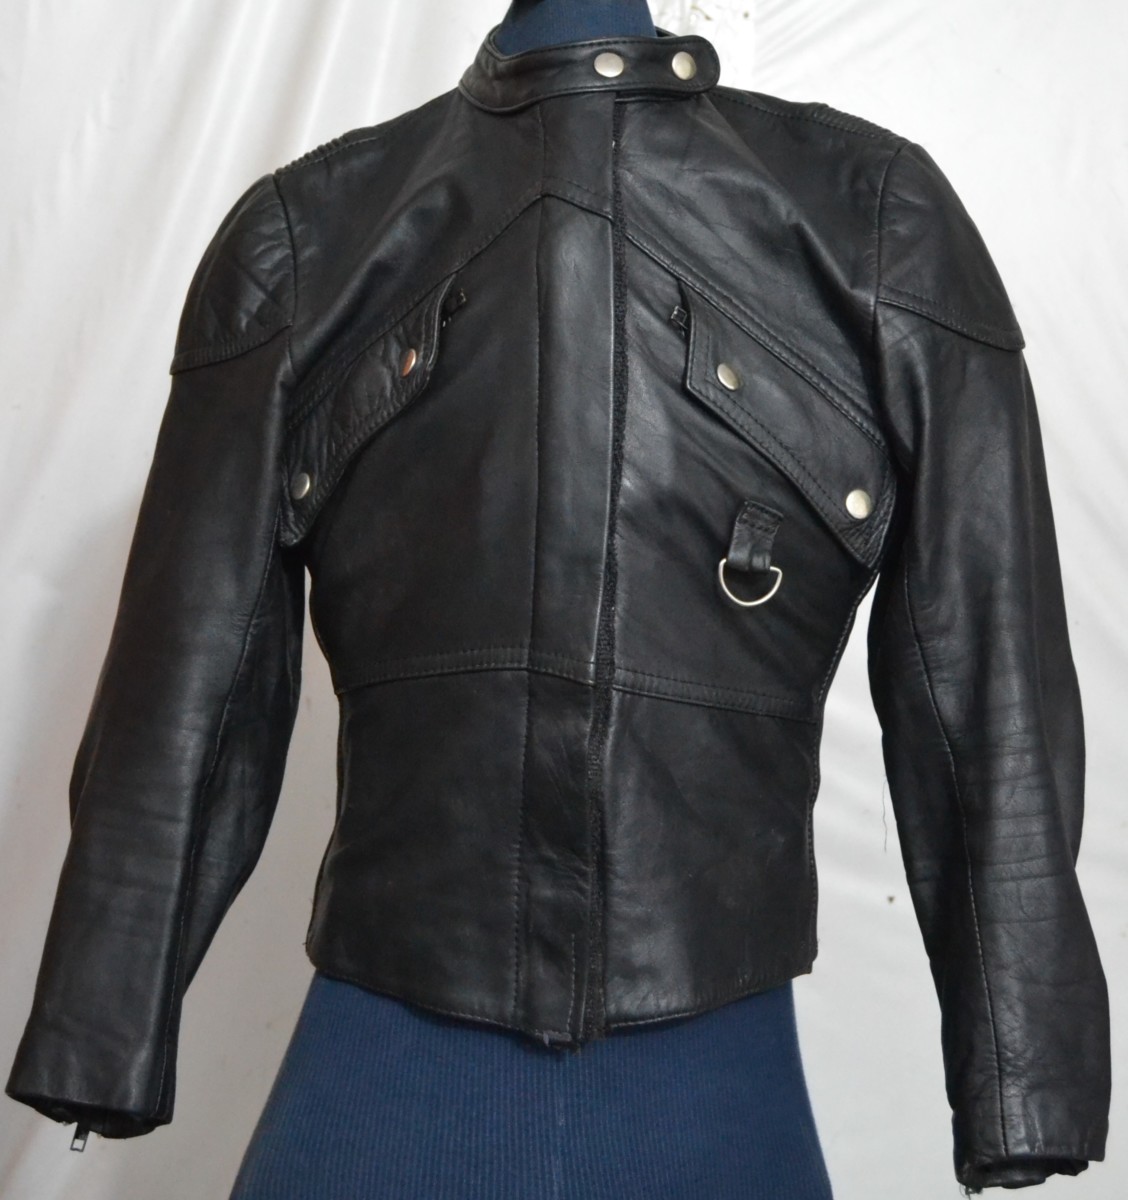 WILHELM KRAWEHL Women's Cruiser Motorcycle Leather Jacket (R-P-14)